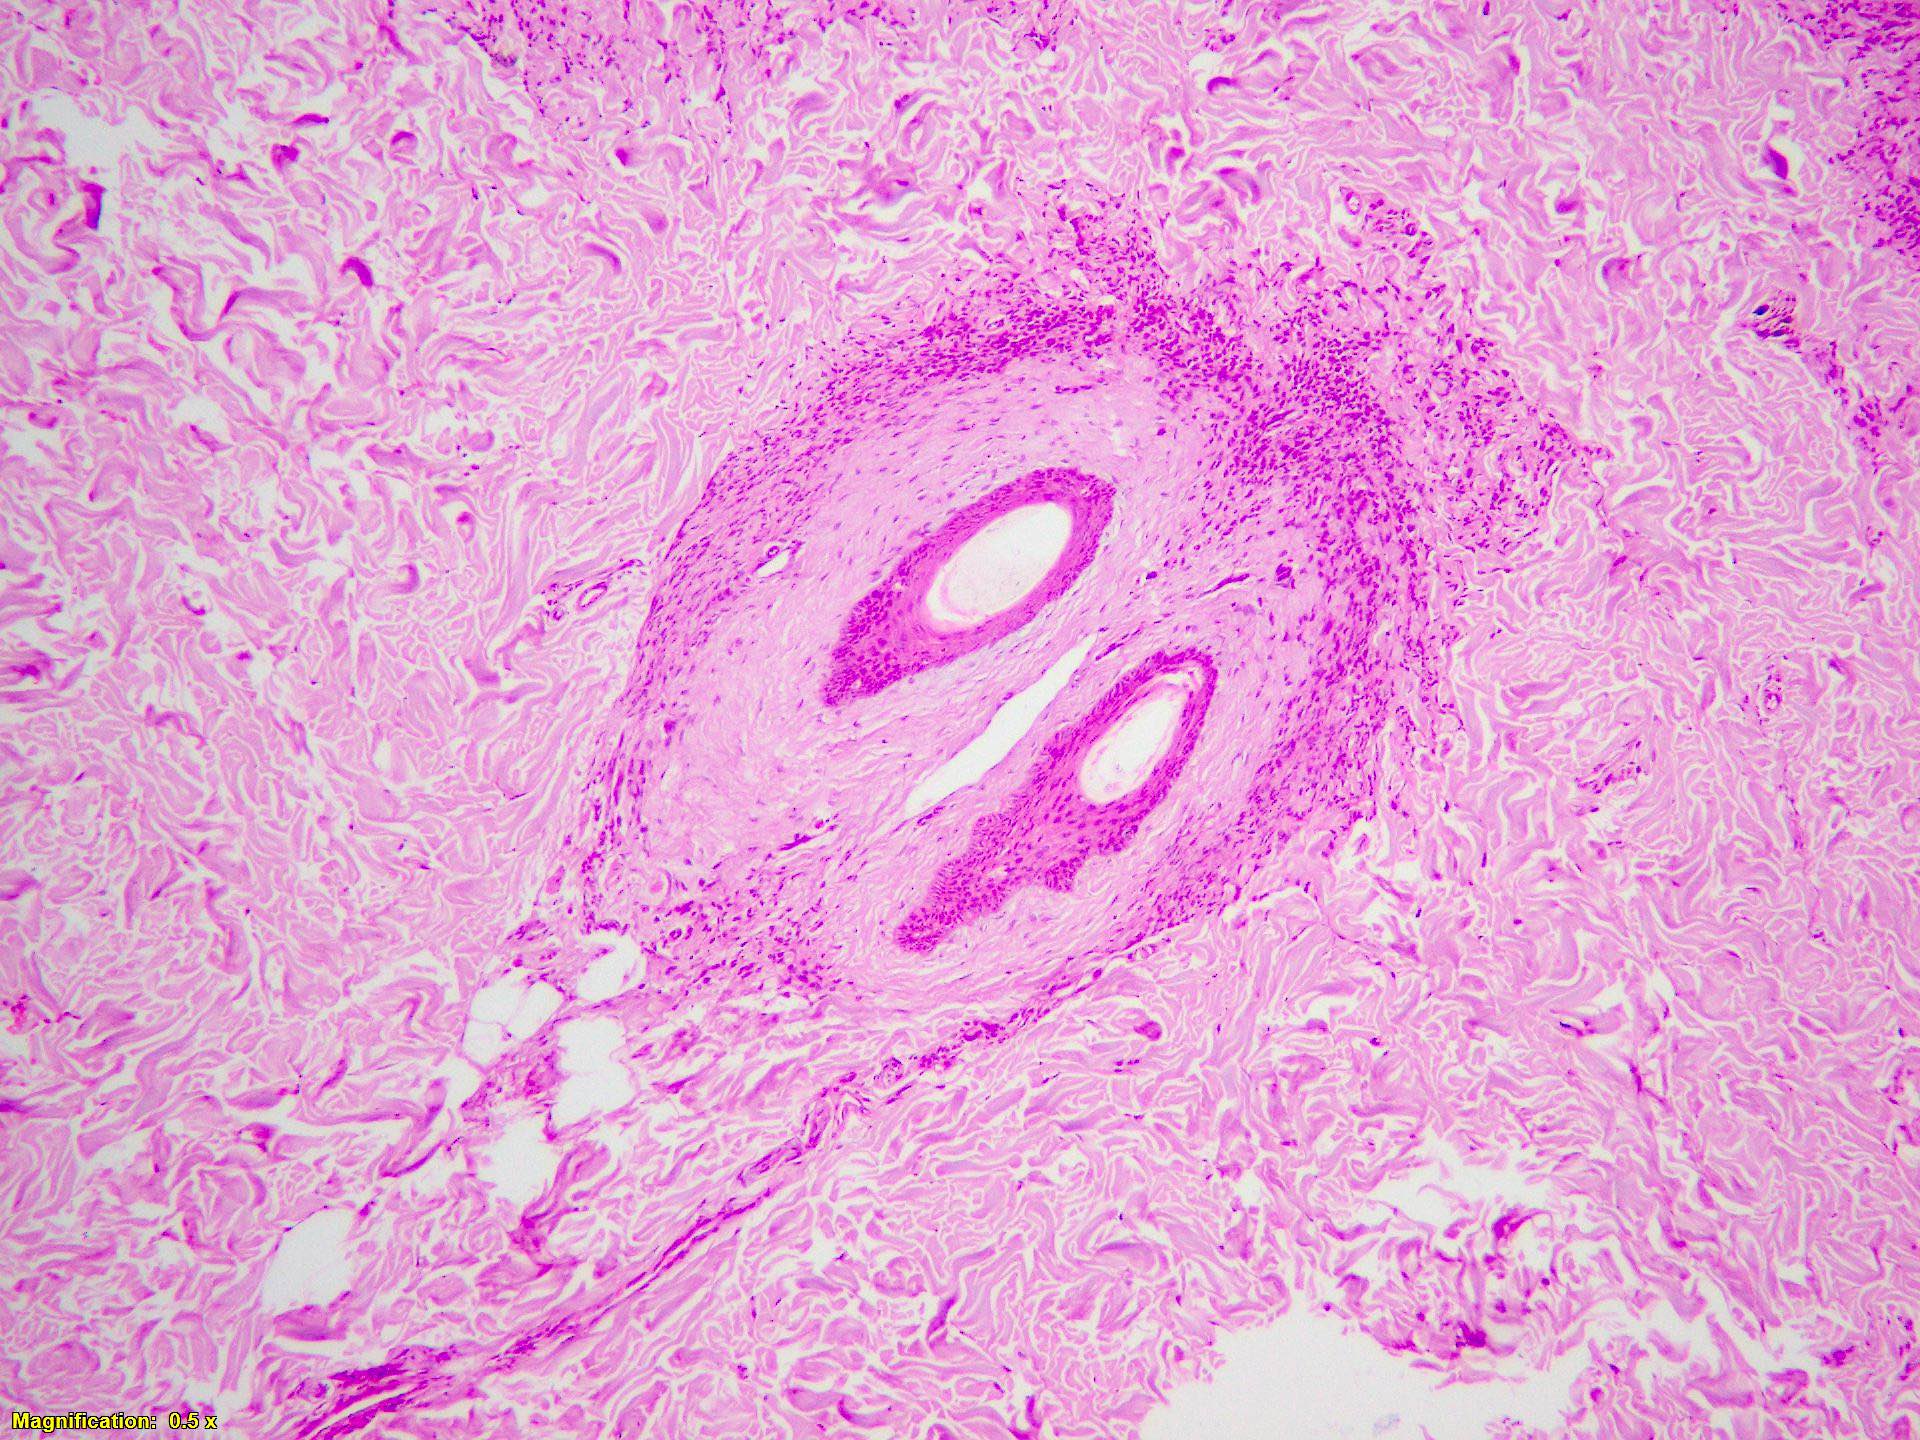 Melanocytes centered on pilosebaceous units